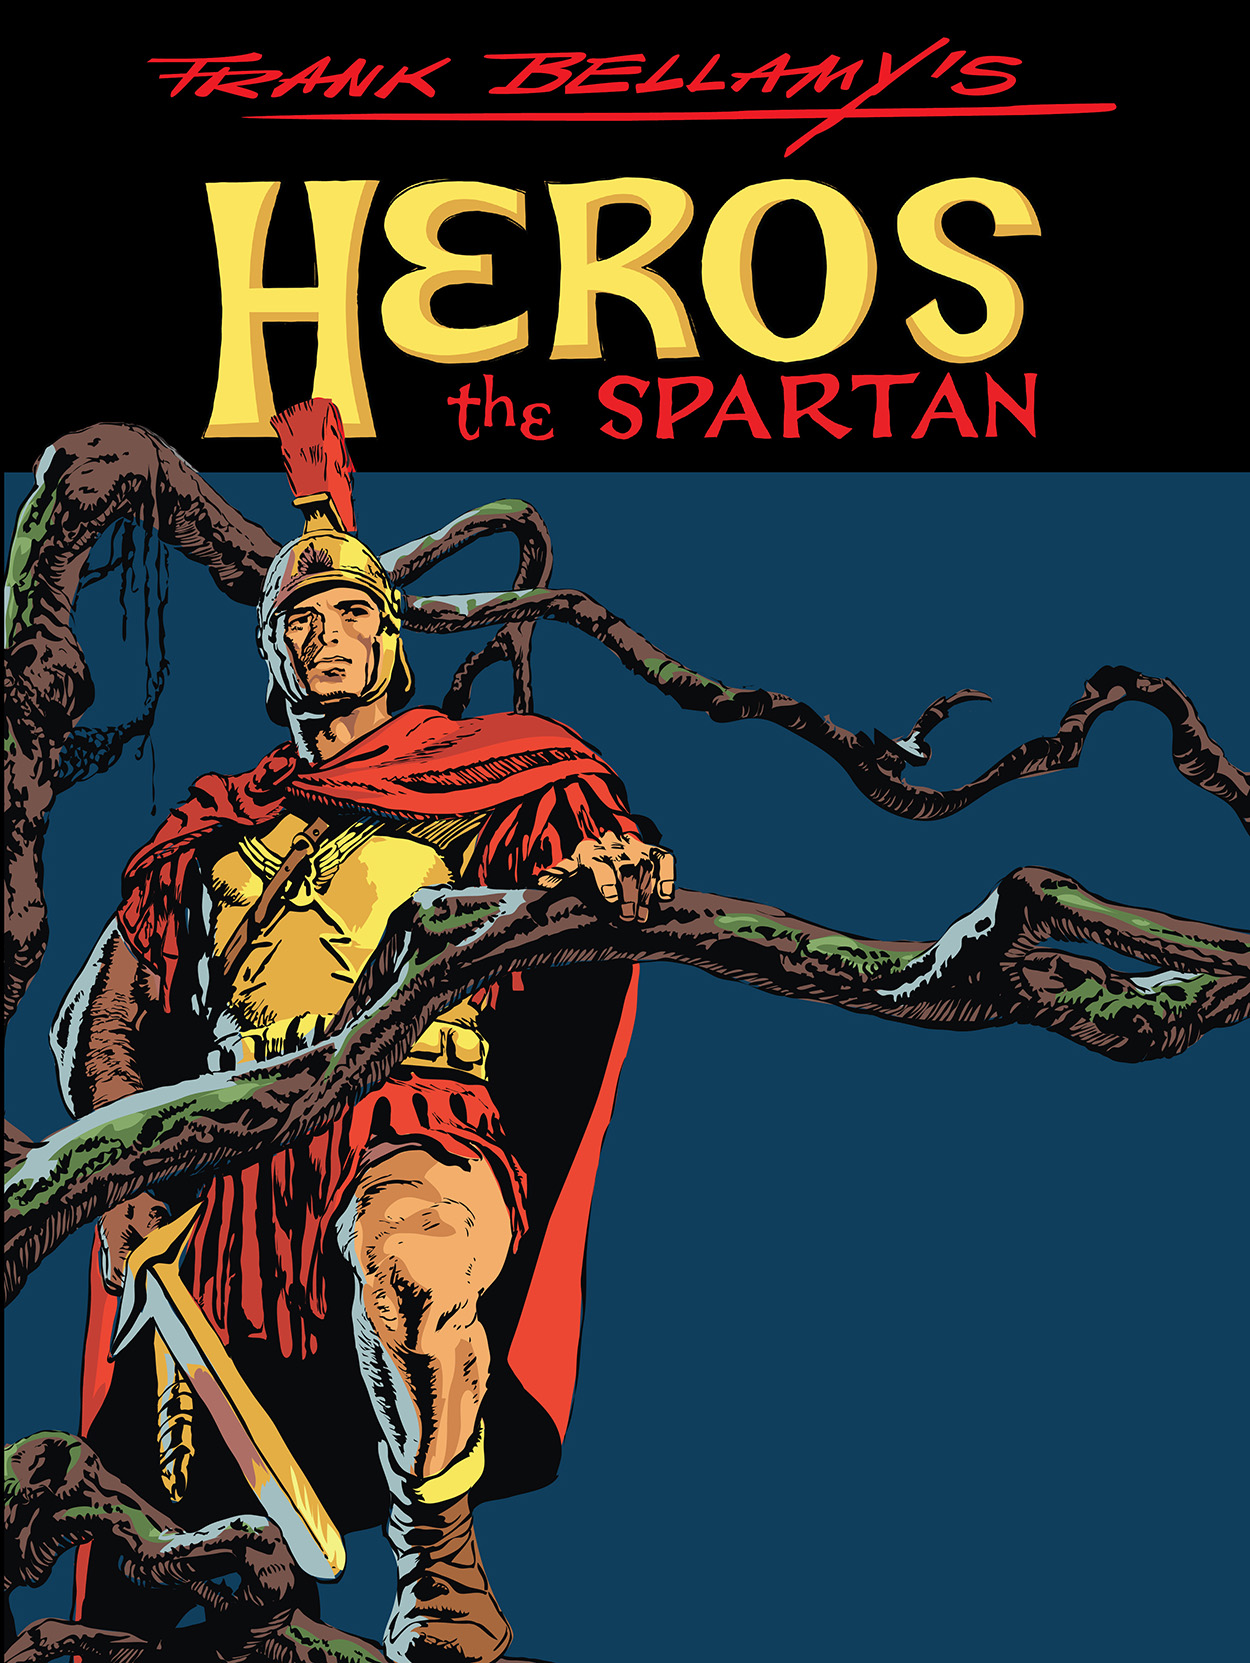 Frank Bellamys Heros The Spartan cover